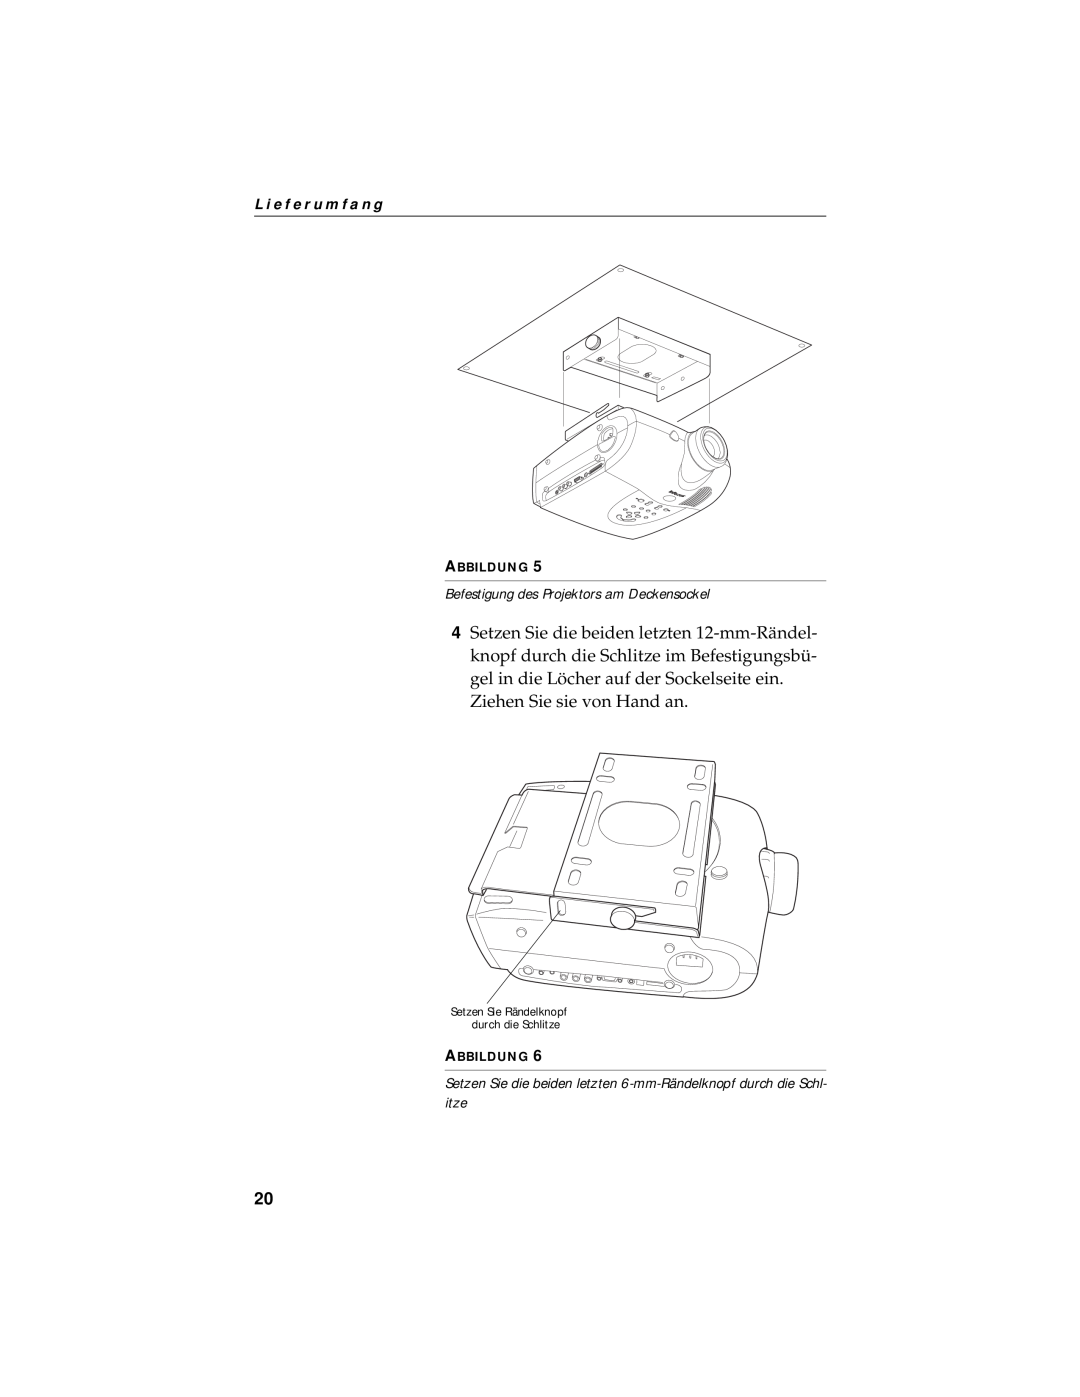 InFocus LP750 manual L i e f e r u m f a n g, Befestigung des Projektors am Deckensockel, Abbildung 